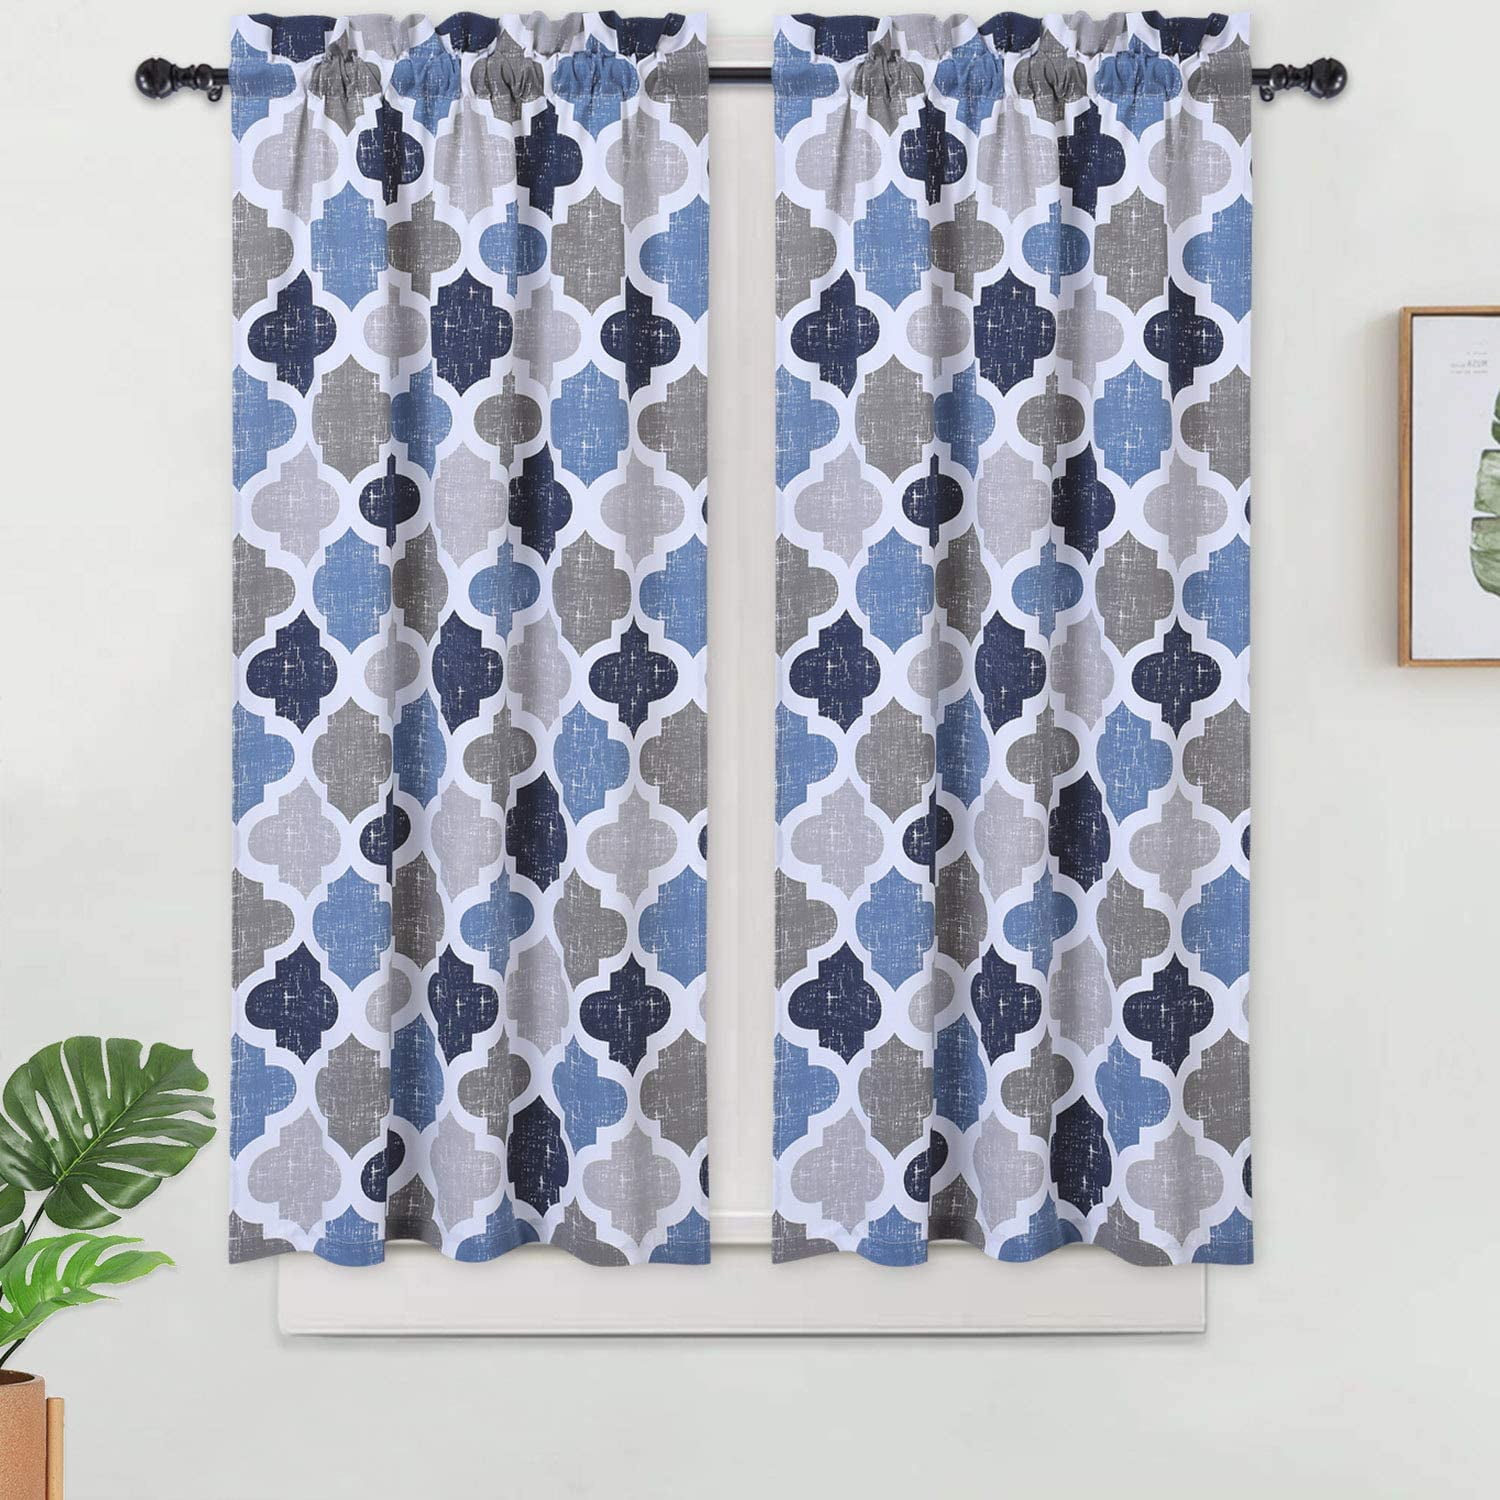 CAROMIO Cafe Curtains 36 Inch Length with Valance Quatrefoil Trellis Printed Cotton Blend Short Farmhouse Kitchen Curtains Bathroom Window Curtains Navy/Blue/Grey 